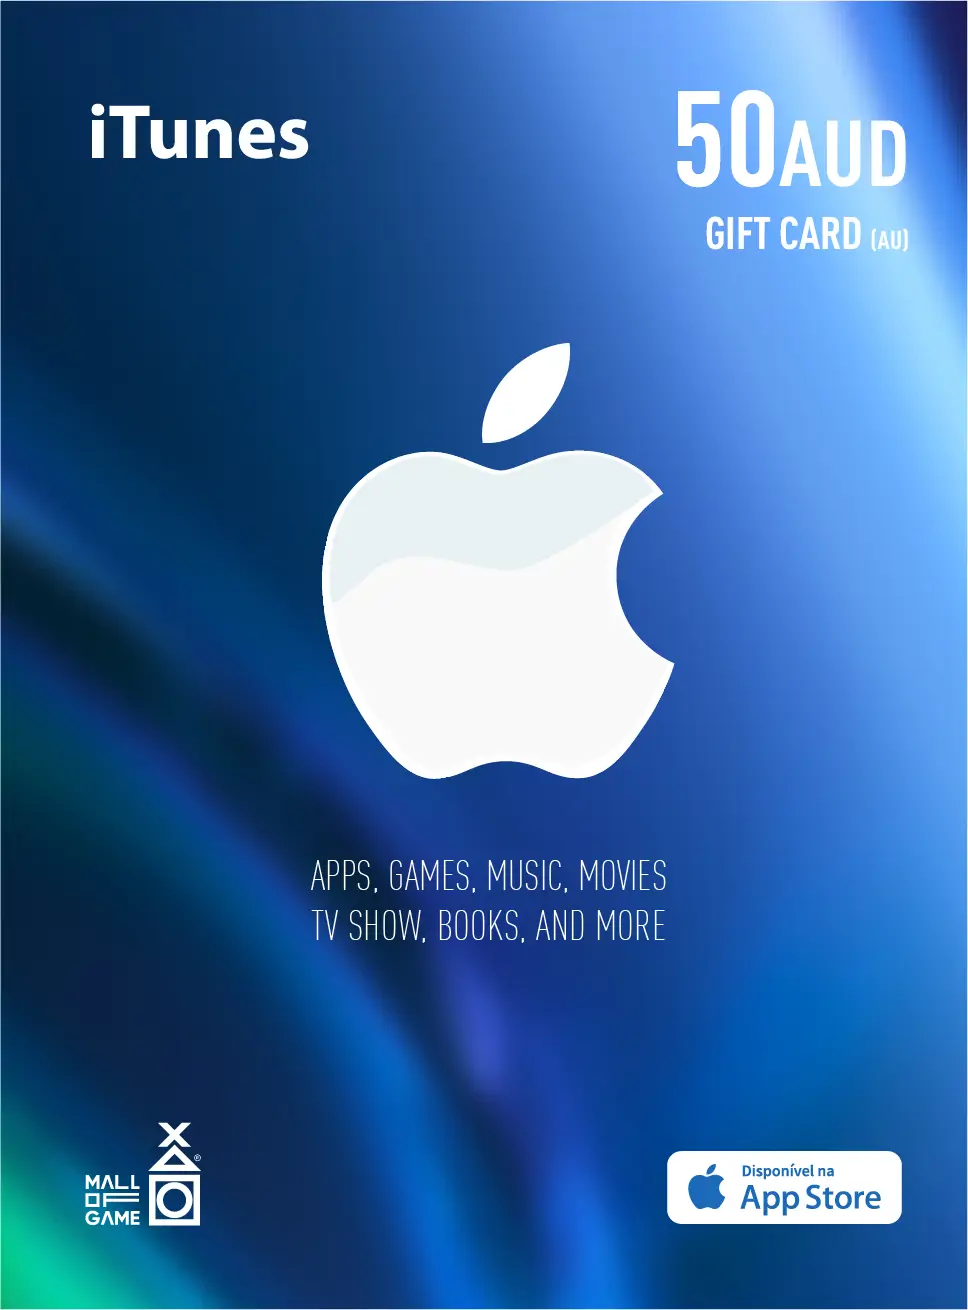 iTunes AUD50 Gift Card (AU)